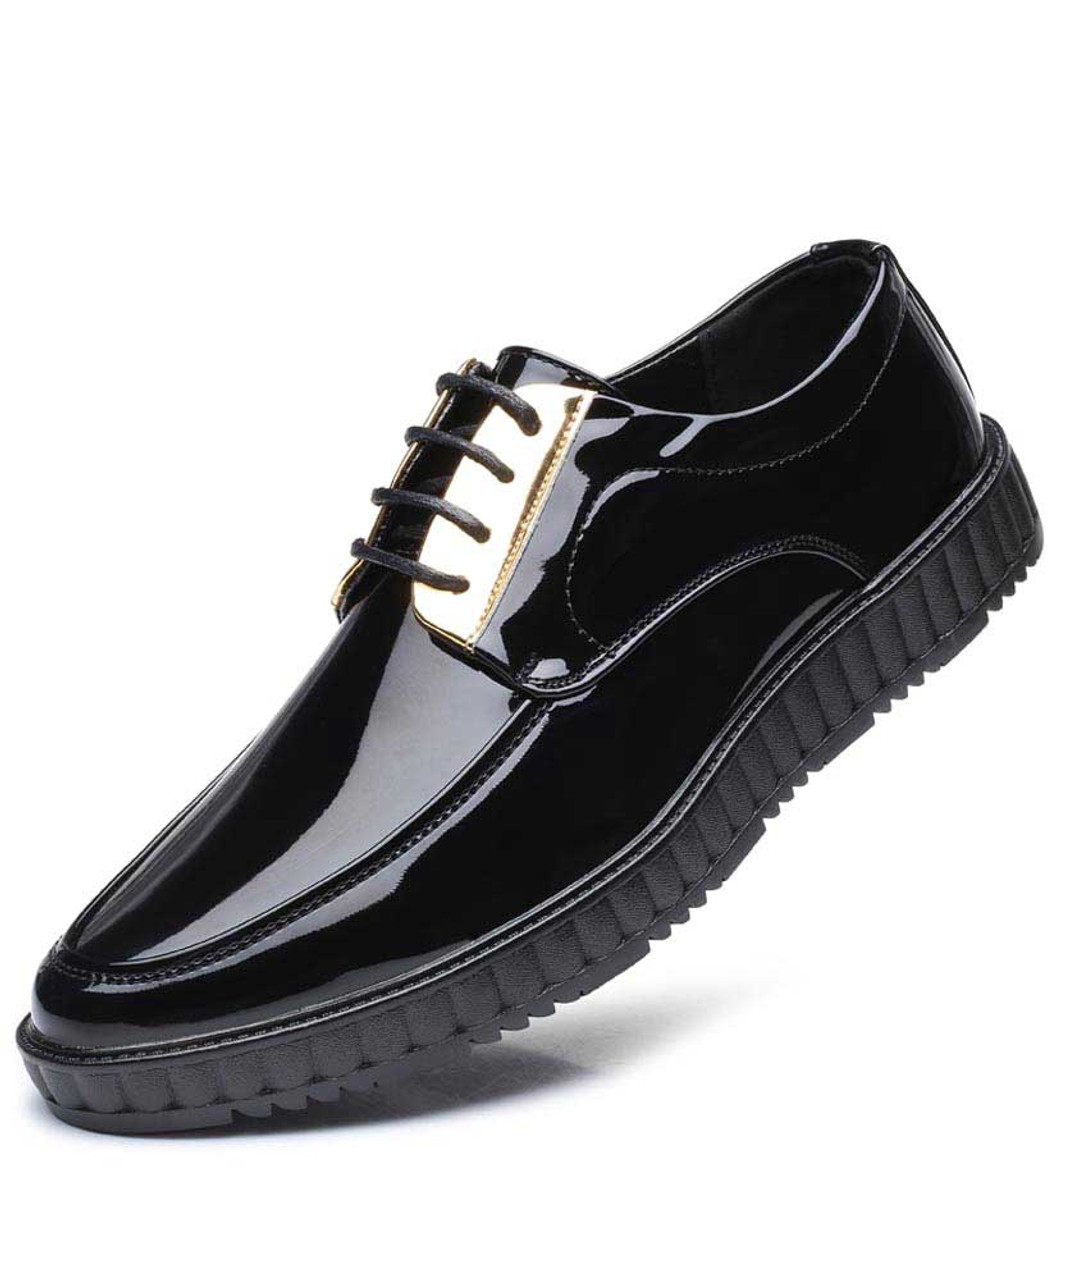 Black golden panel leather derby dress shoe | Mens dress shoes online ...